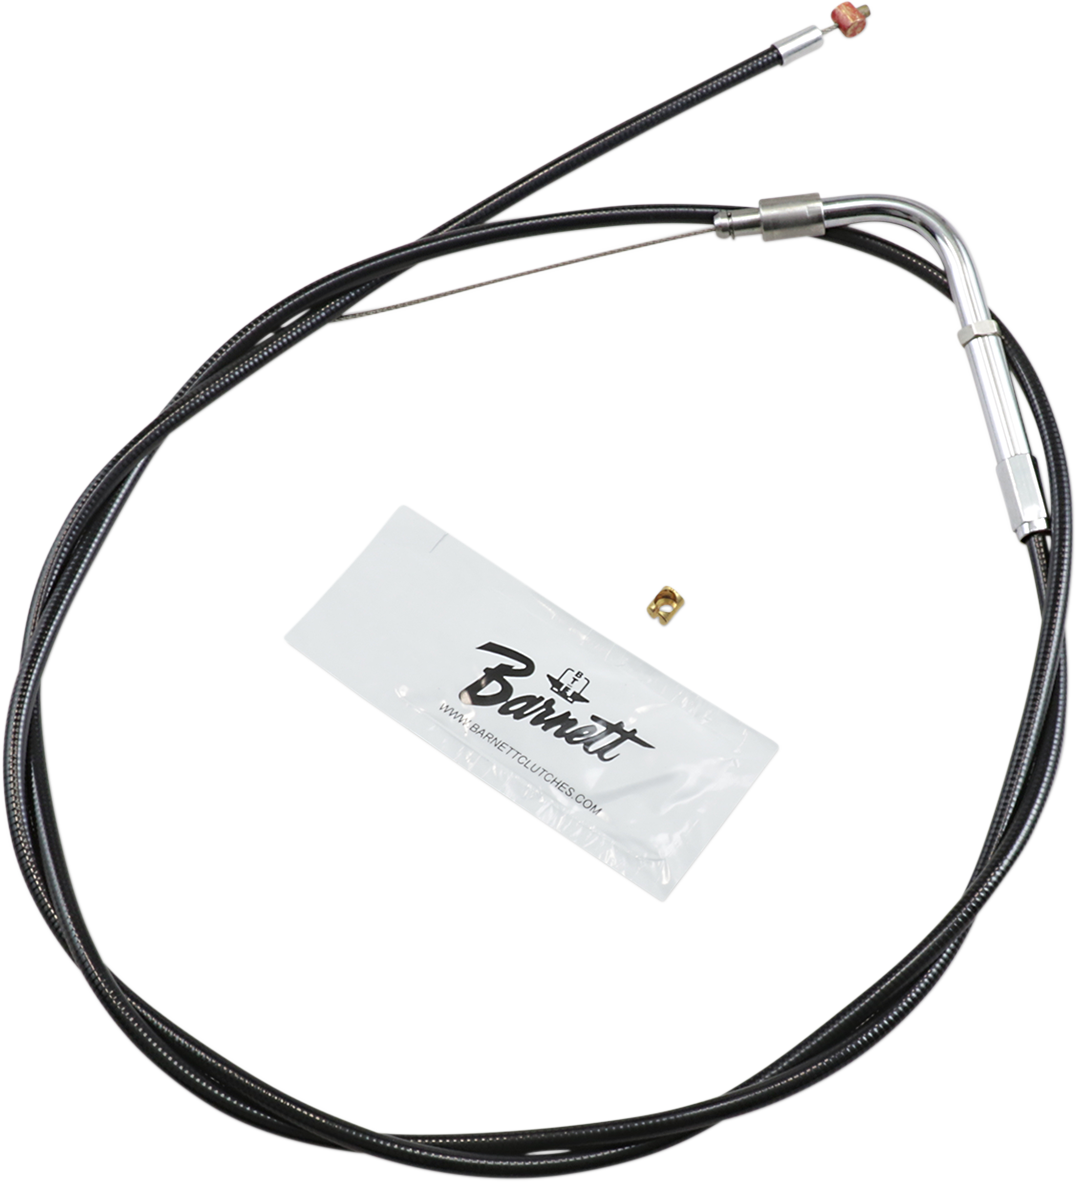 Cable de ralentí BARNETT - +6" - Negro 101-30-40017-06